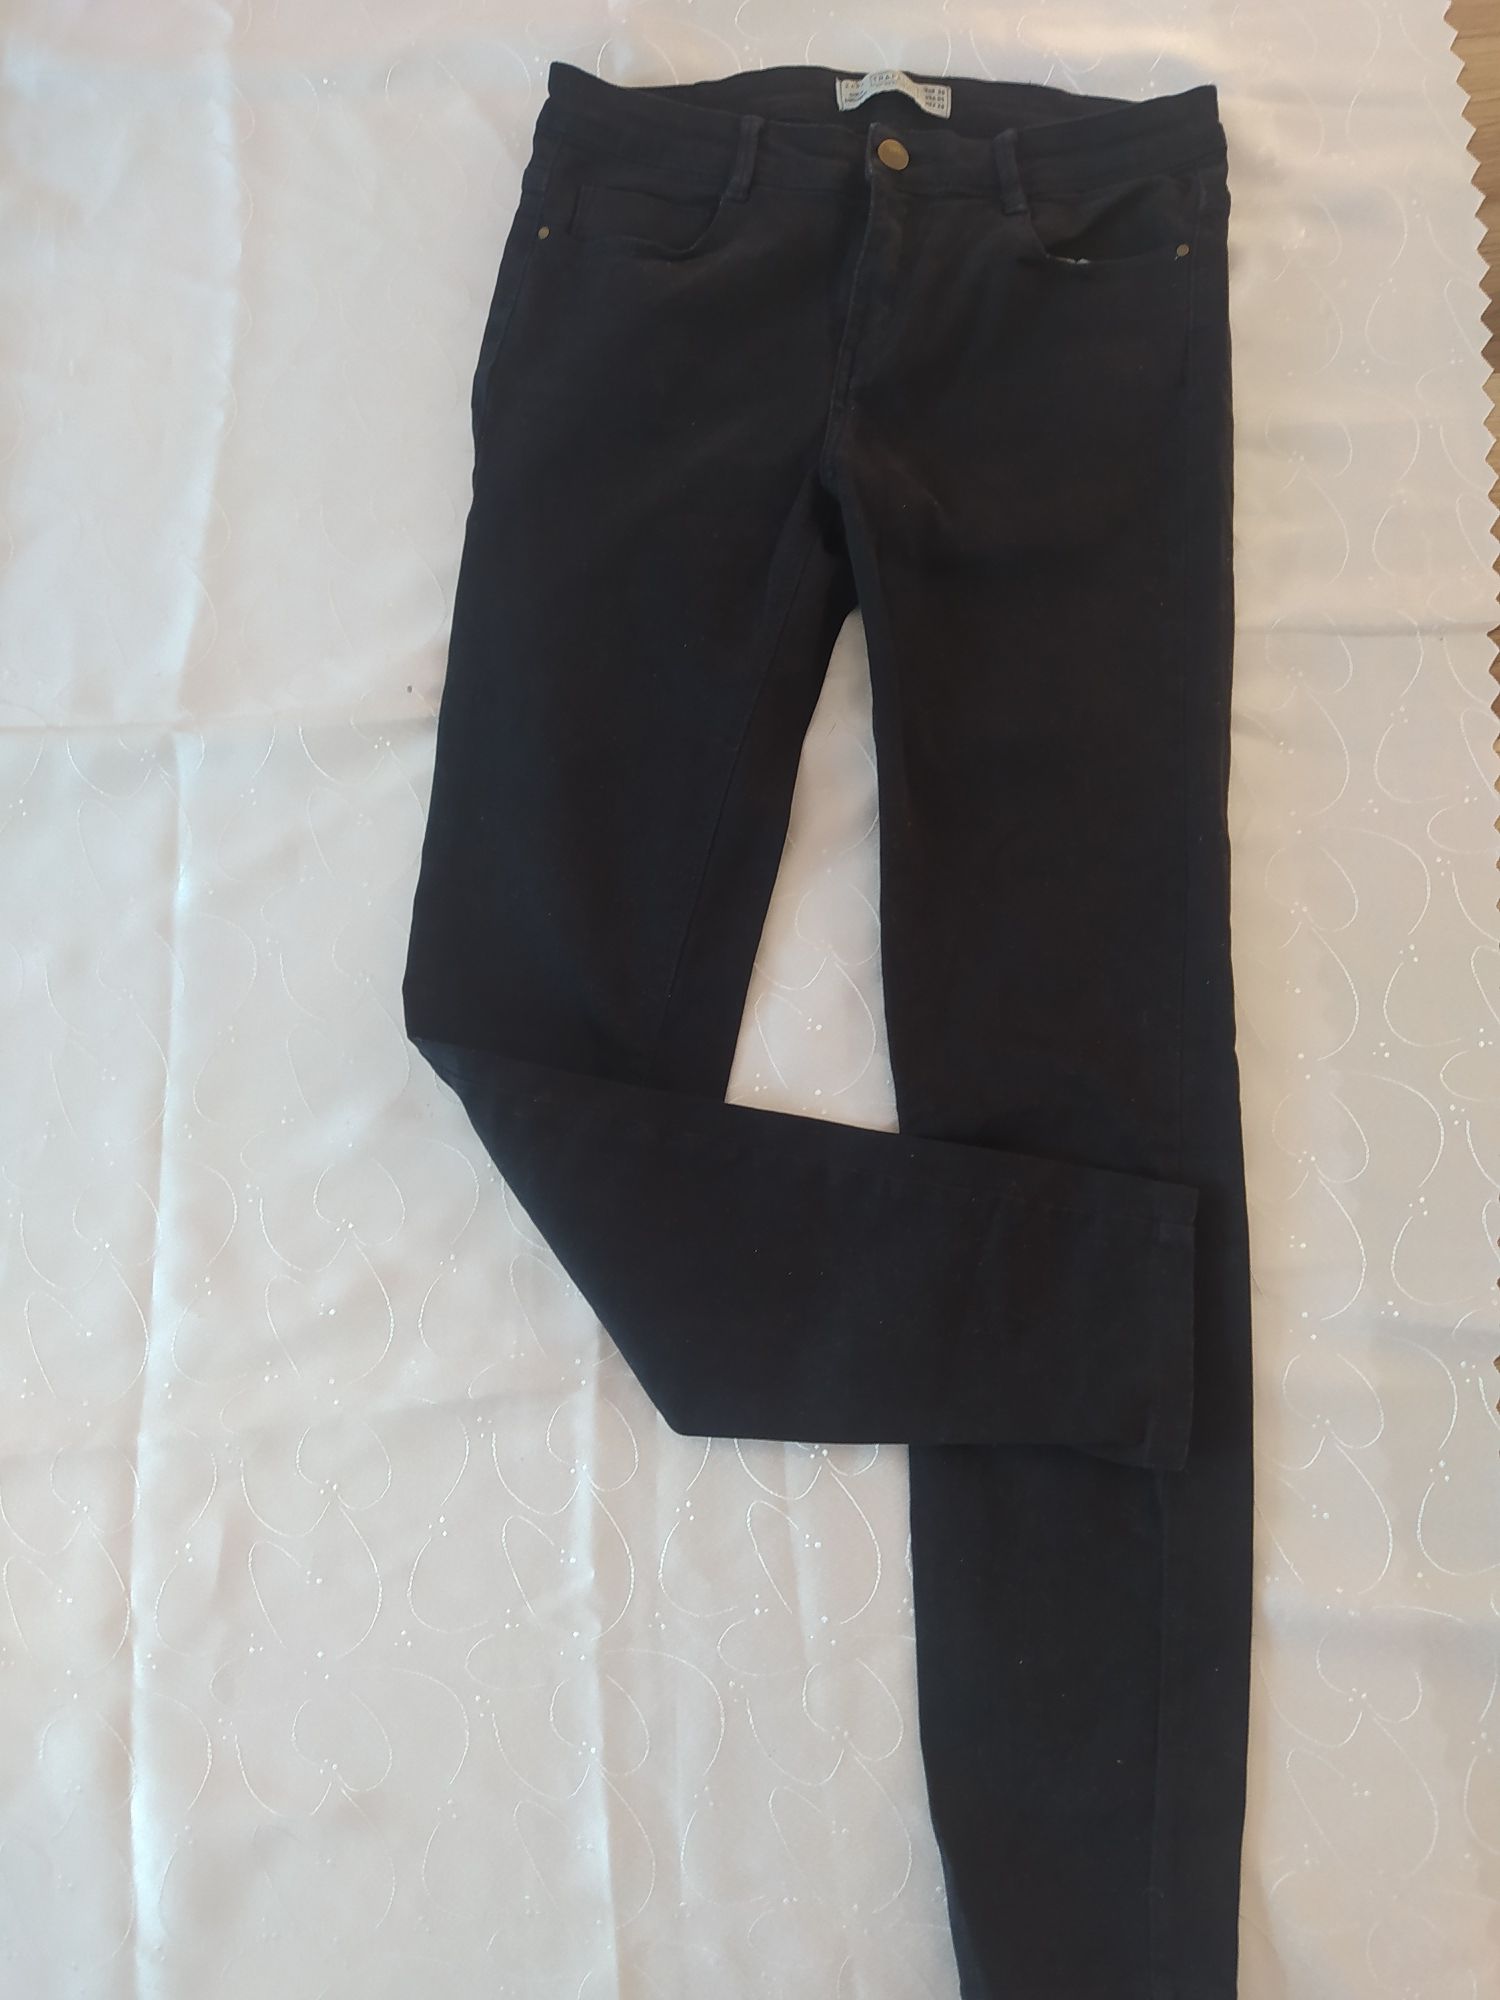 Spodnie damskie dżinsy czarne r36